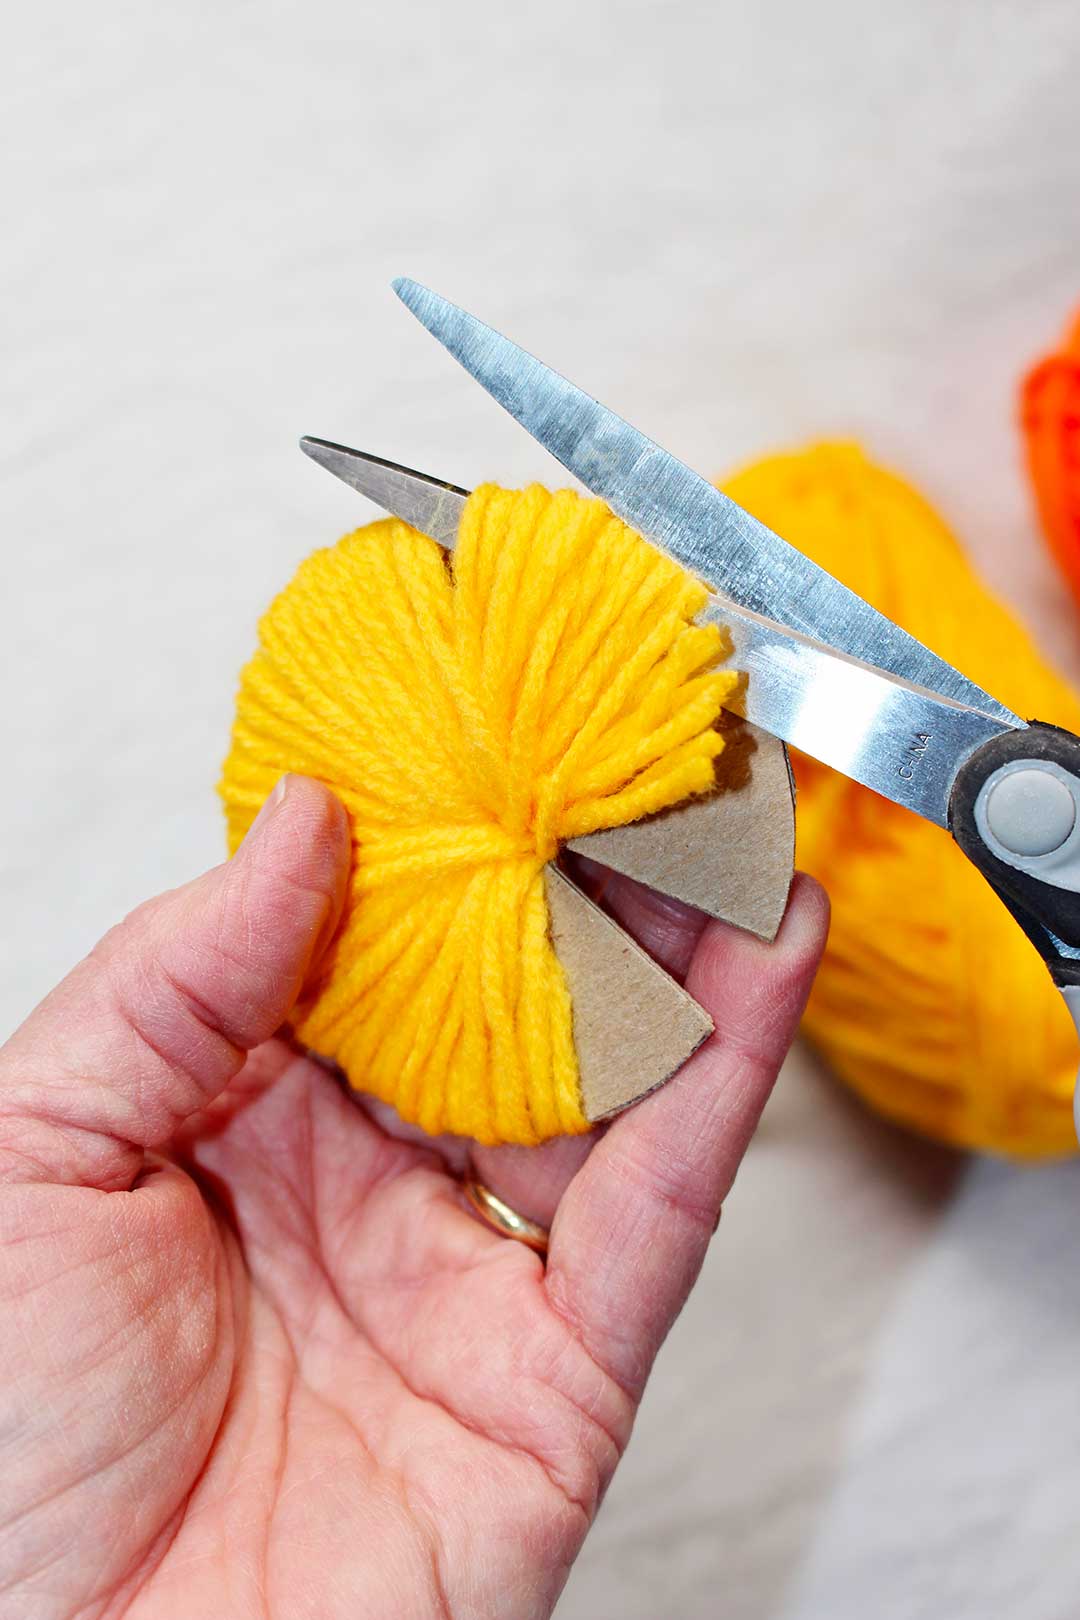 Scissors cutting the yellow yarn wrapped around a cardboard circular shape.